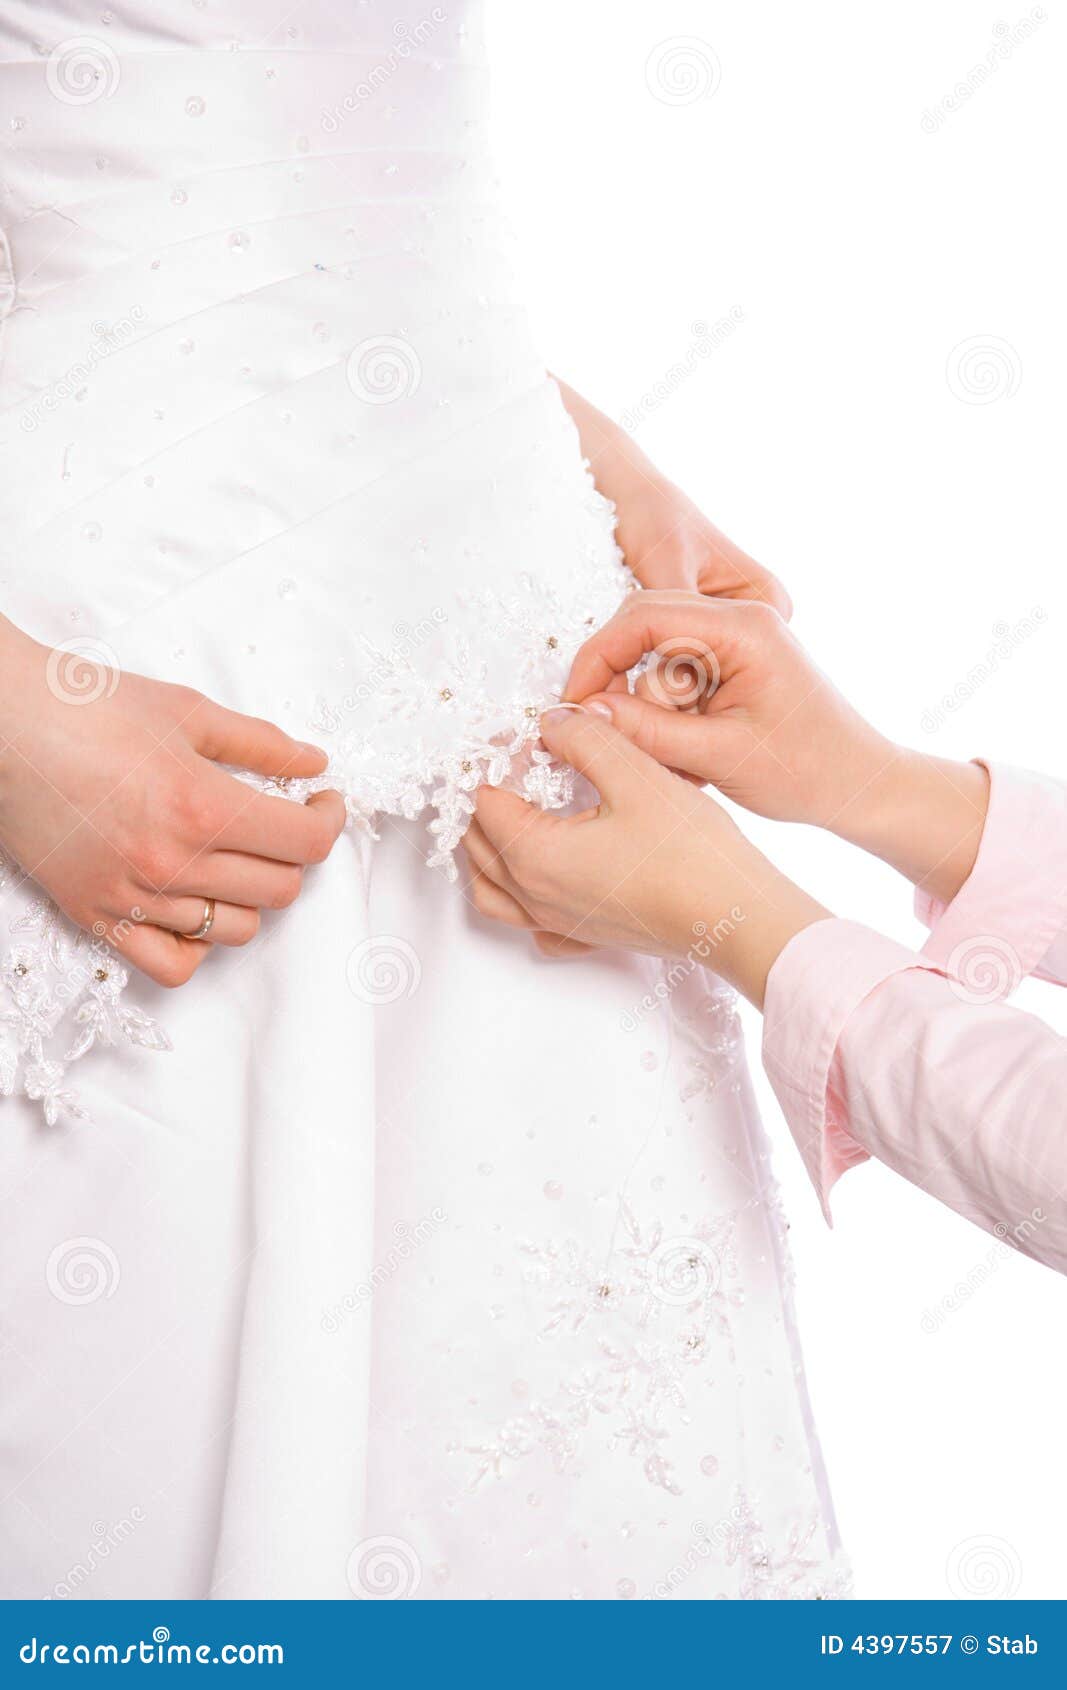 tailor sew dress of bride